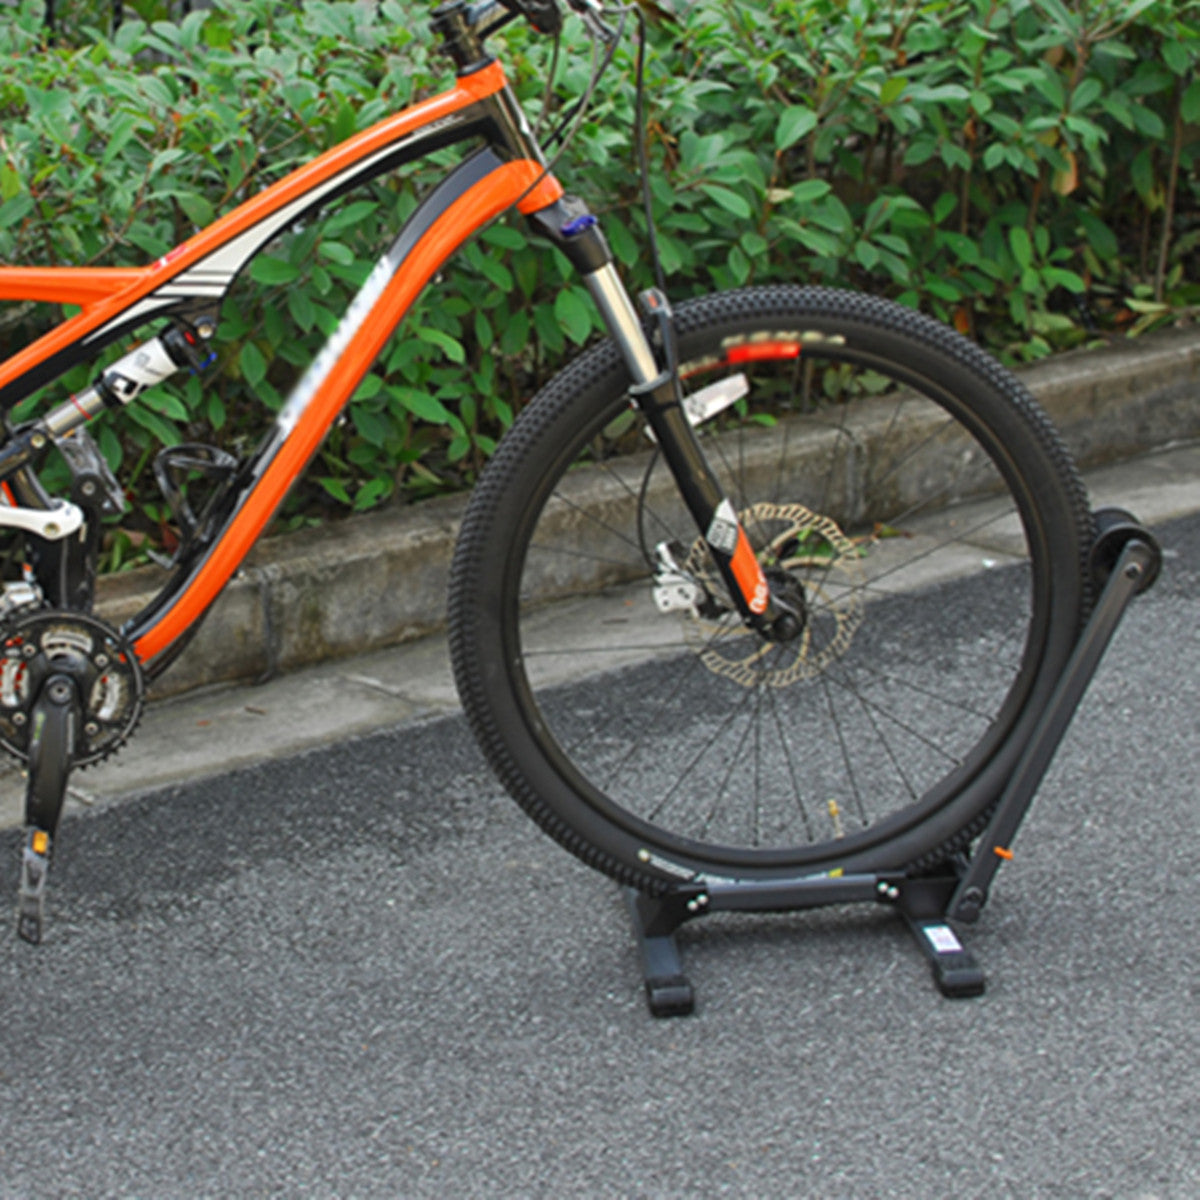 BIKIGHT L Type Folding Floor Bike Stand Adjustable Parking Rack Bicycle Storage